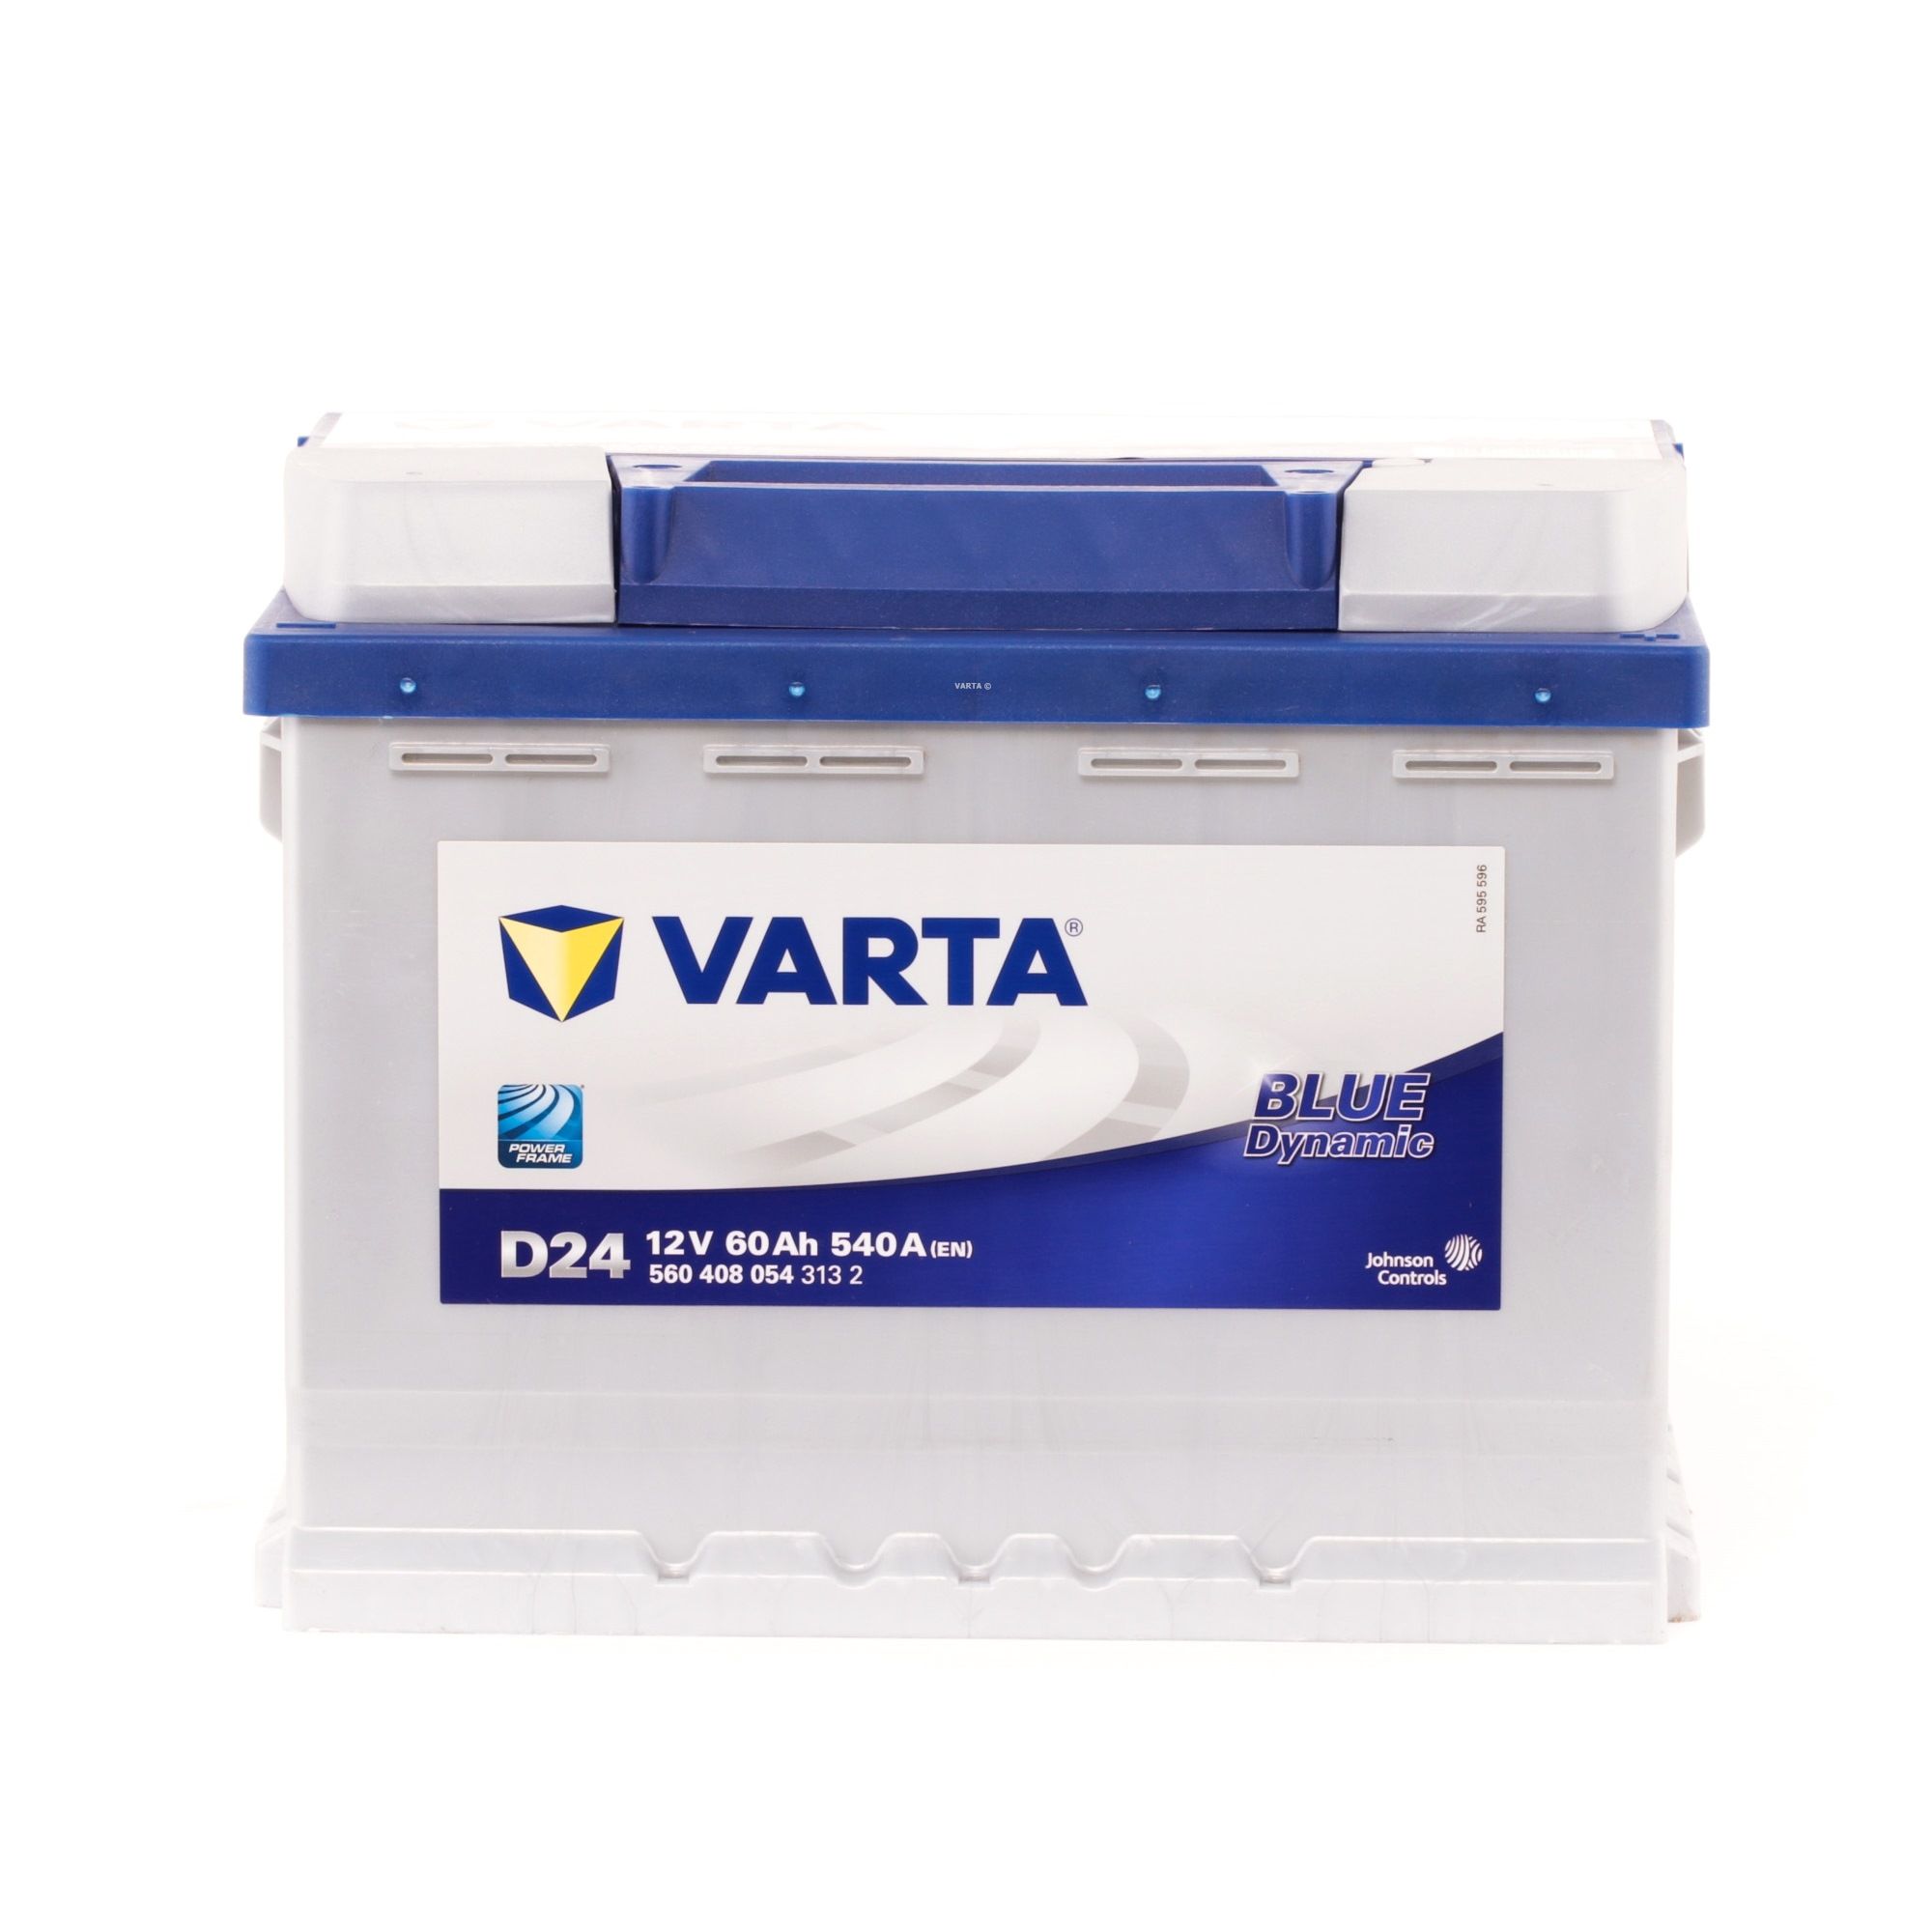 VARTA BLUE dynamic 5604080543132 Bateria de arranque 12V 60Ah 540A B13 Bateria chumbo-ácido